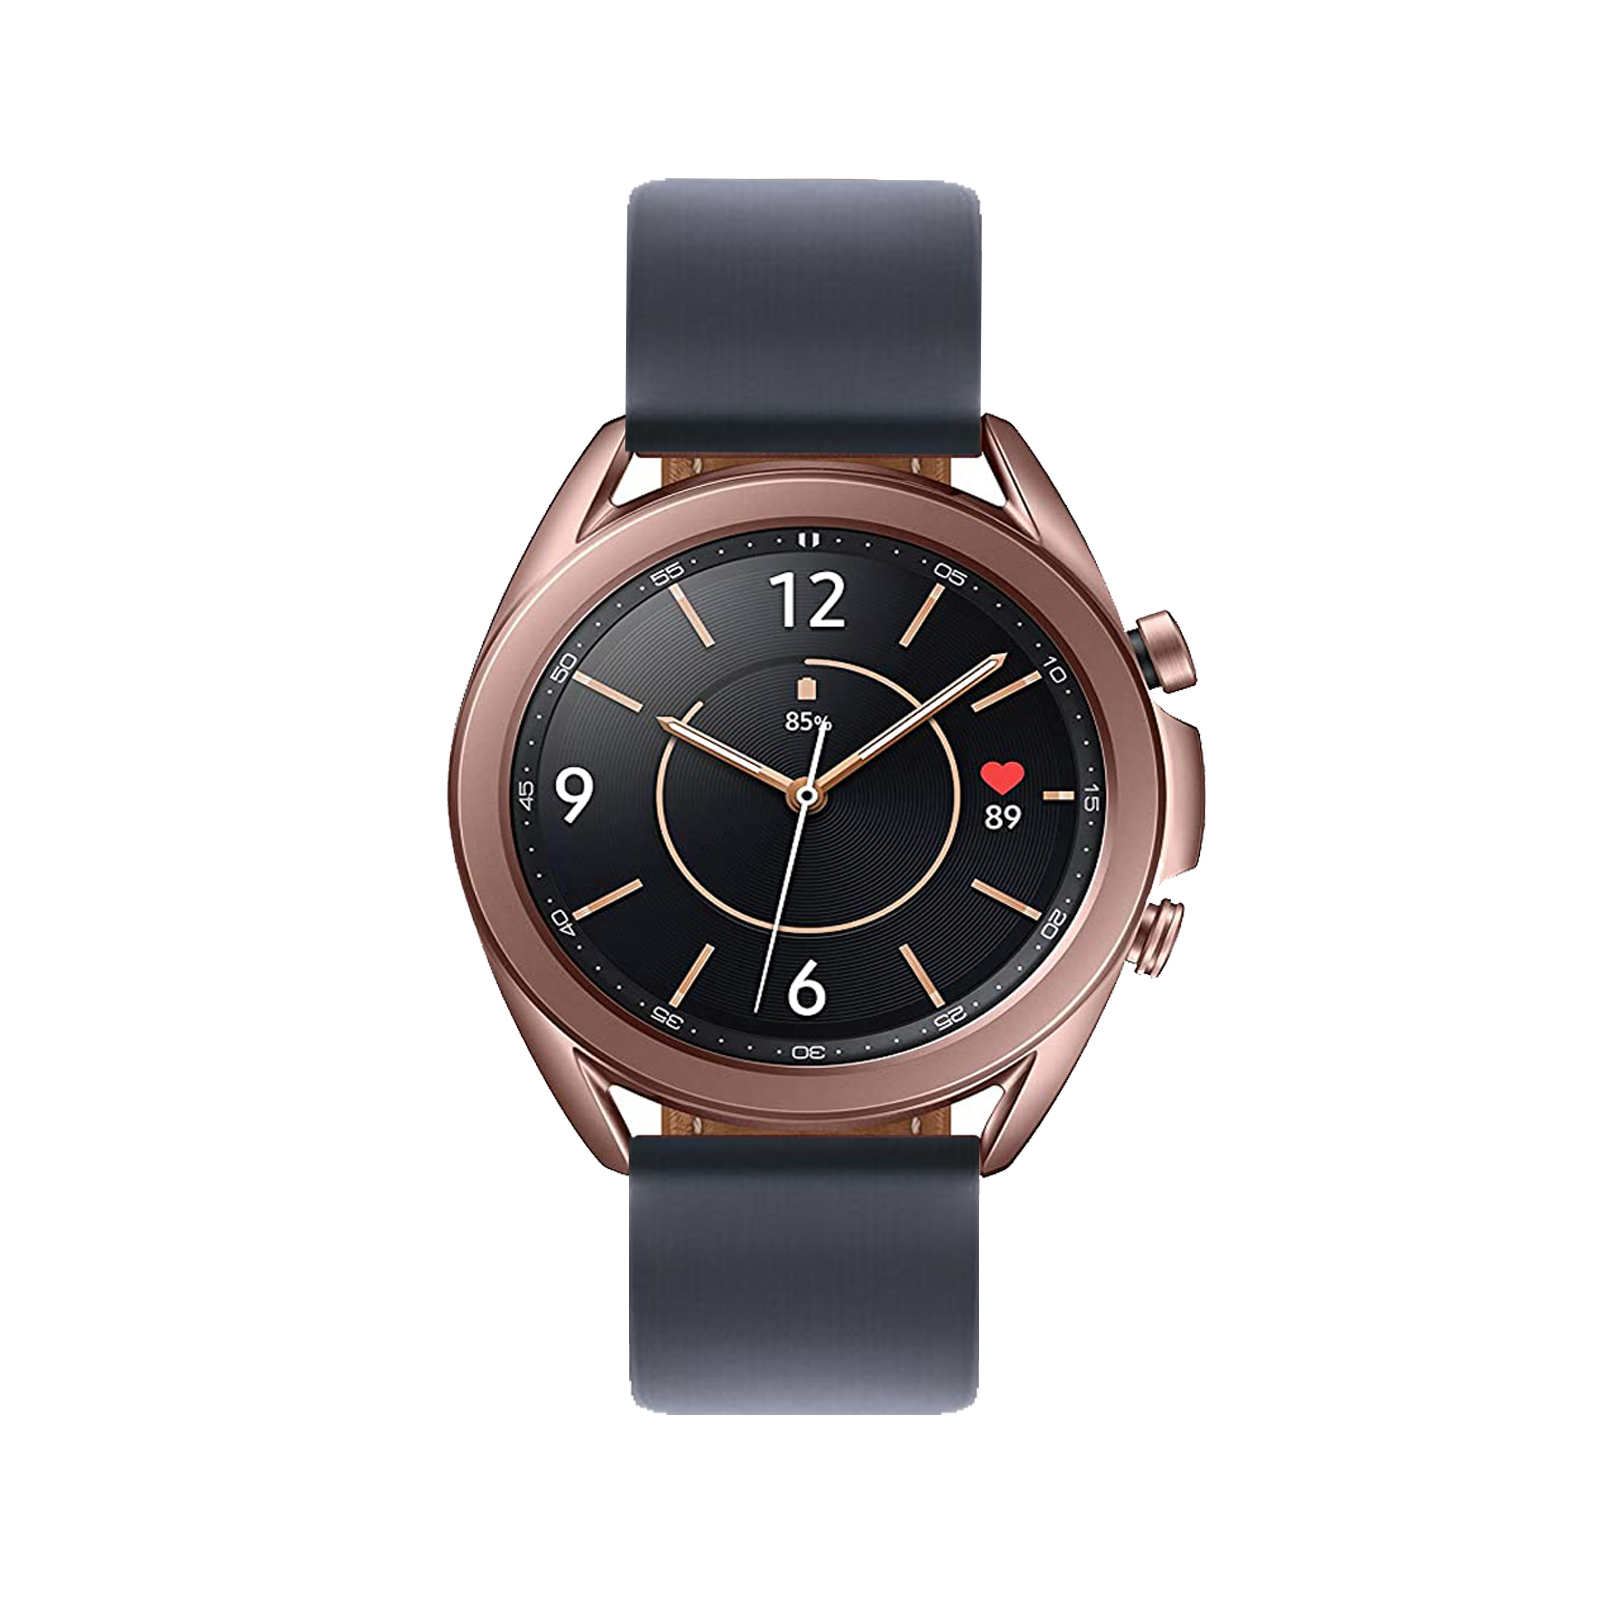 Samsung Galaxy Watch 3 [Wi+Fi + Cellular] [41mm] [Copper] [Excellent]